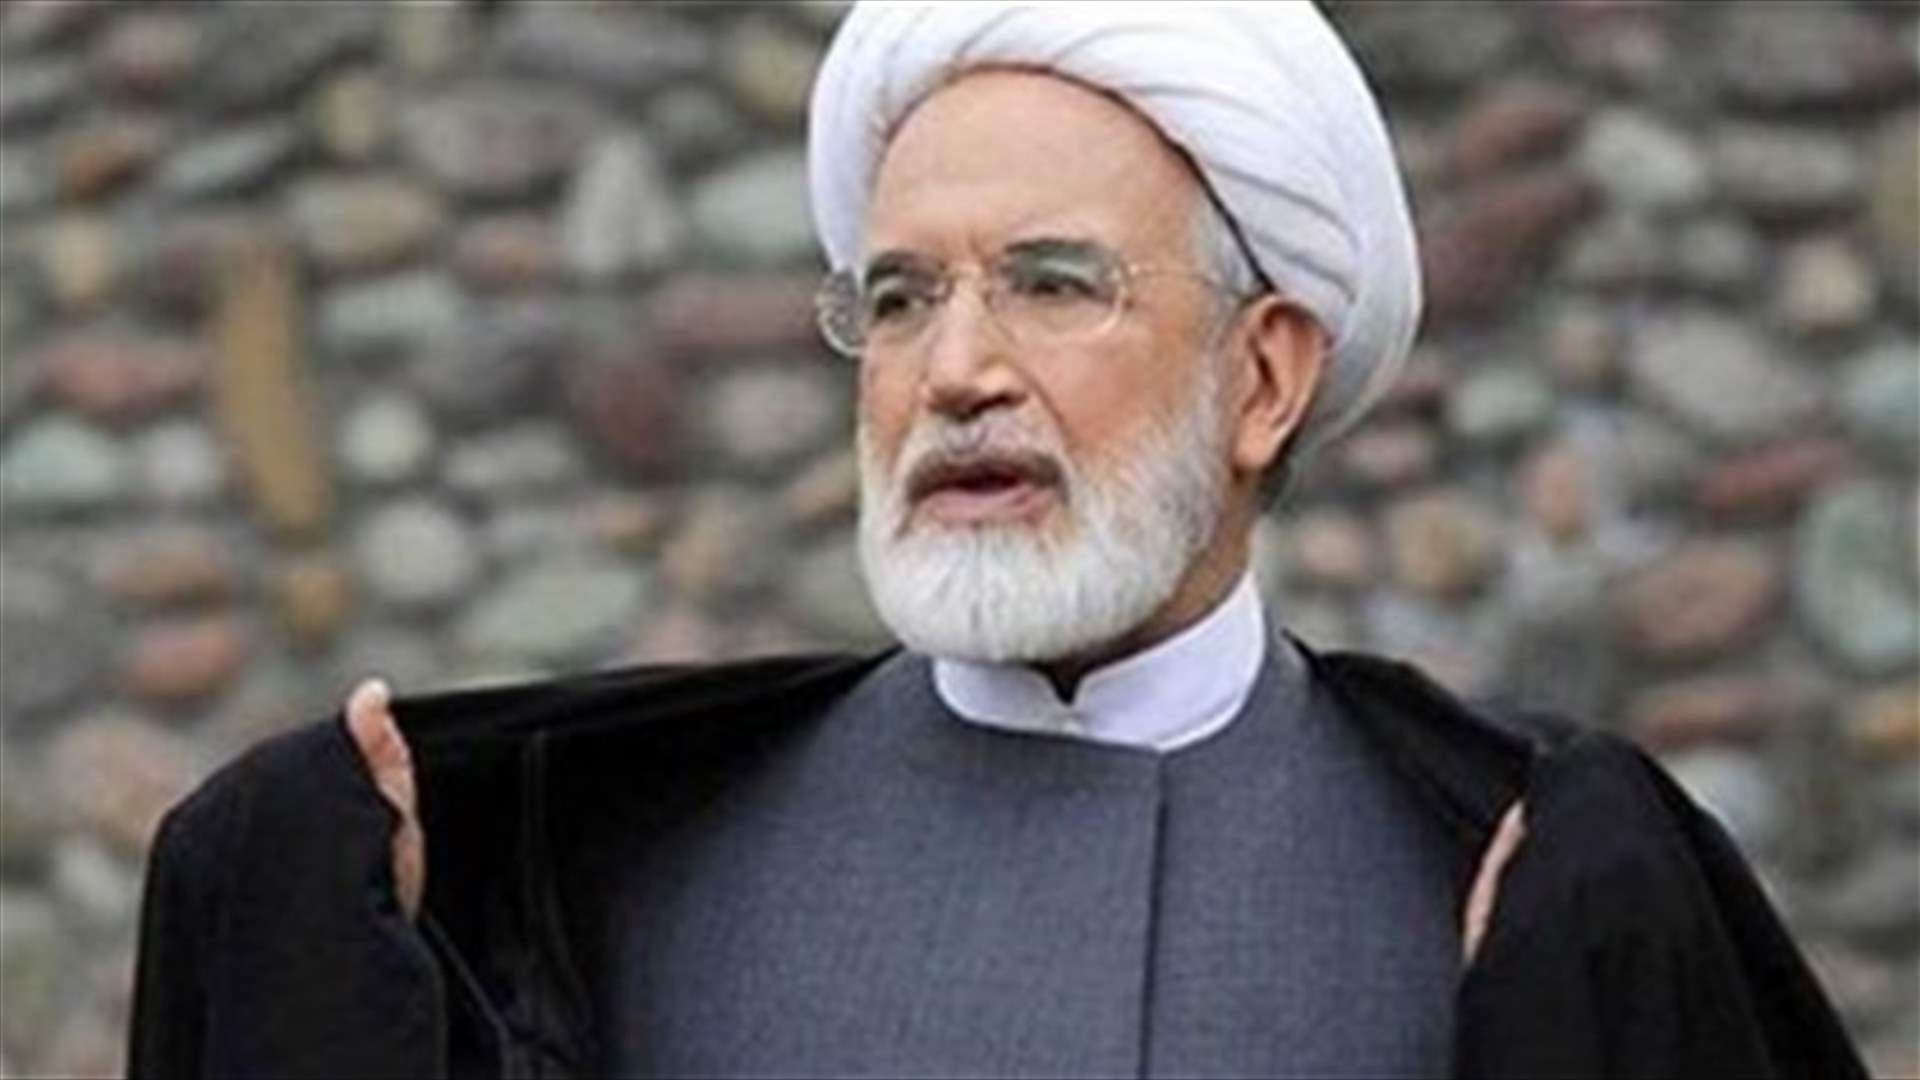 Iranian opposition leader hospitalized after hunger strike -report